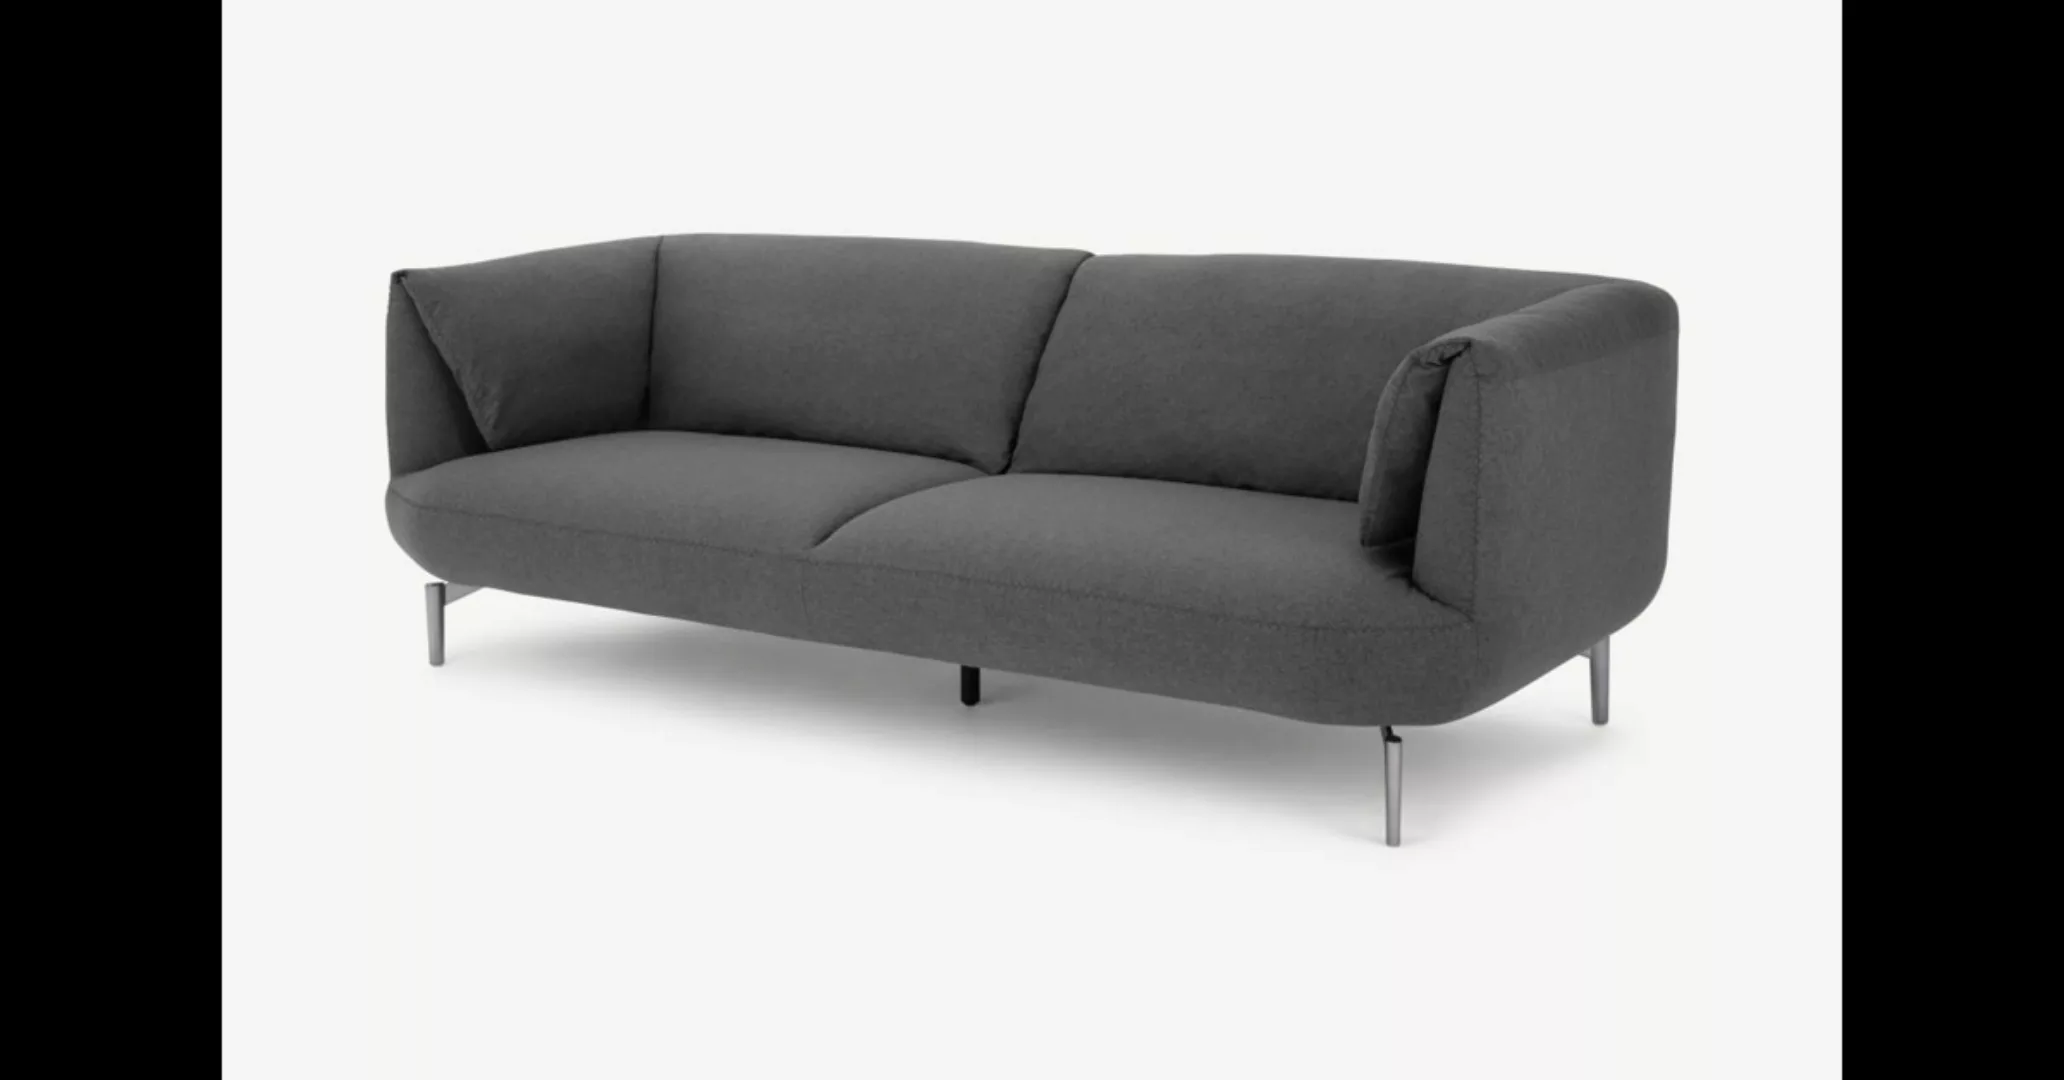 Inka 3-Sitzer Sofa, Marlgrau - MADE.com günstig online kaufen